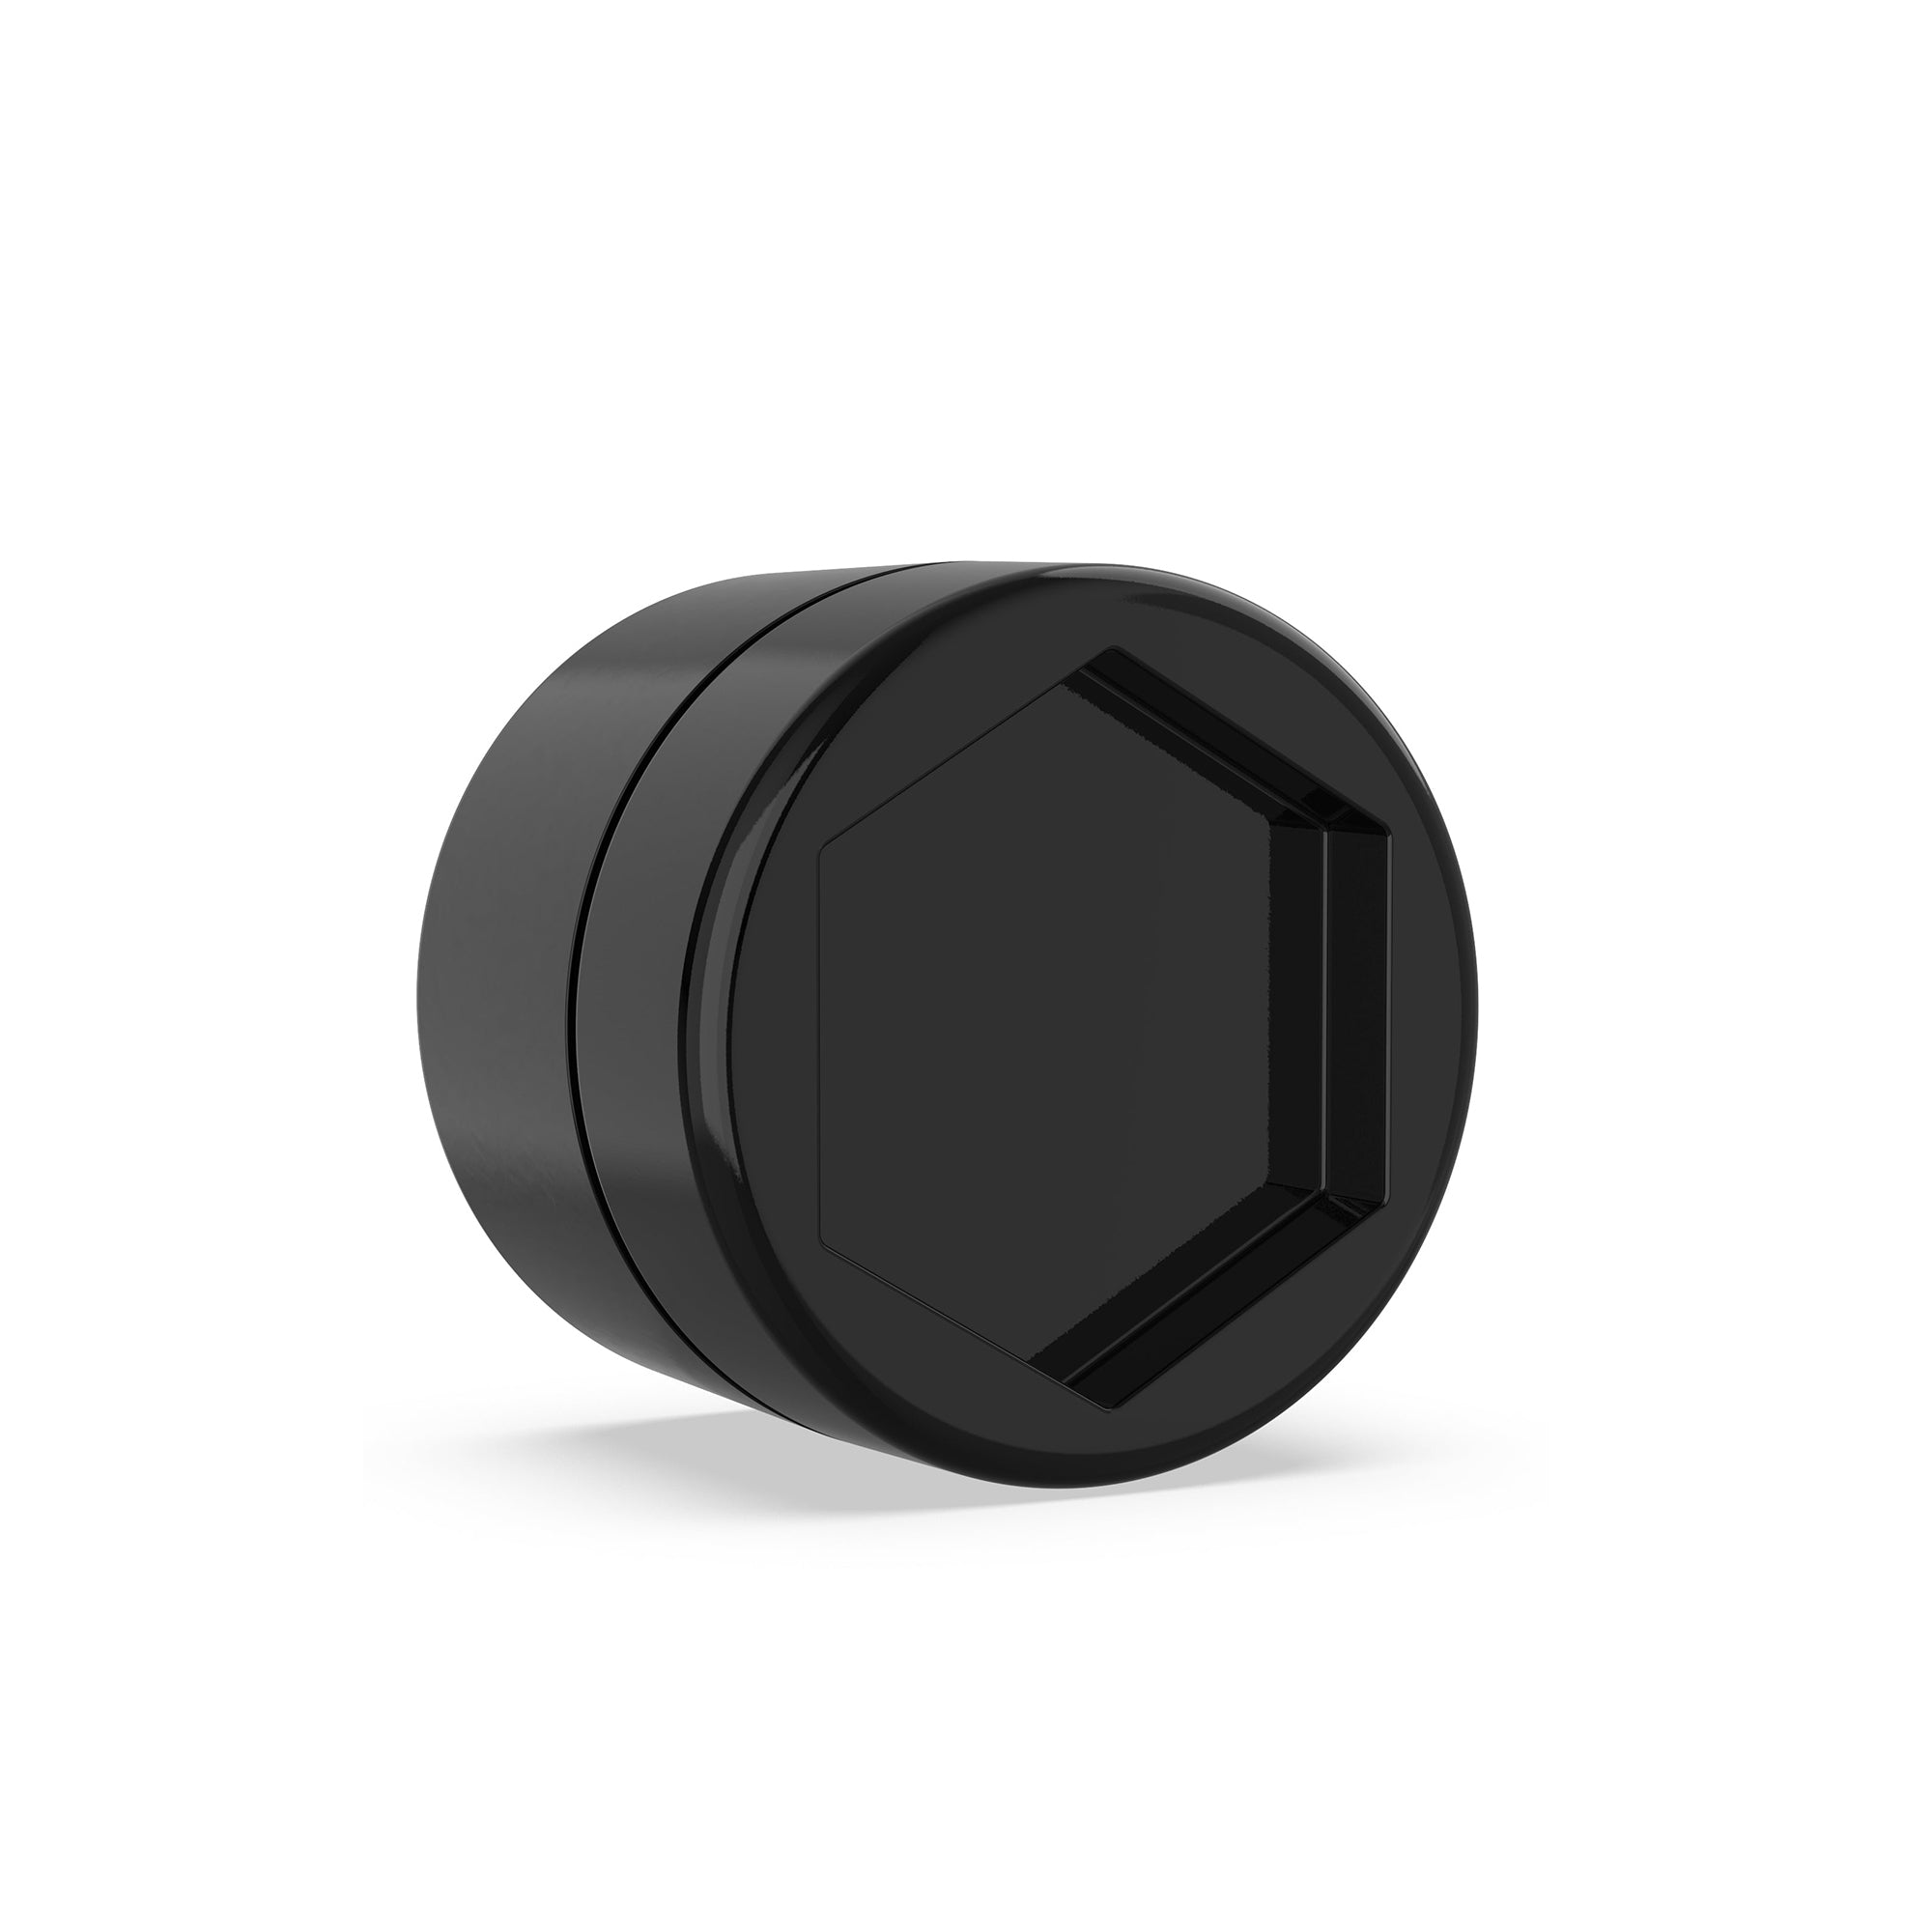 5 Oz Child-Resistant “Flat Lid” Jar with Black Lid